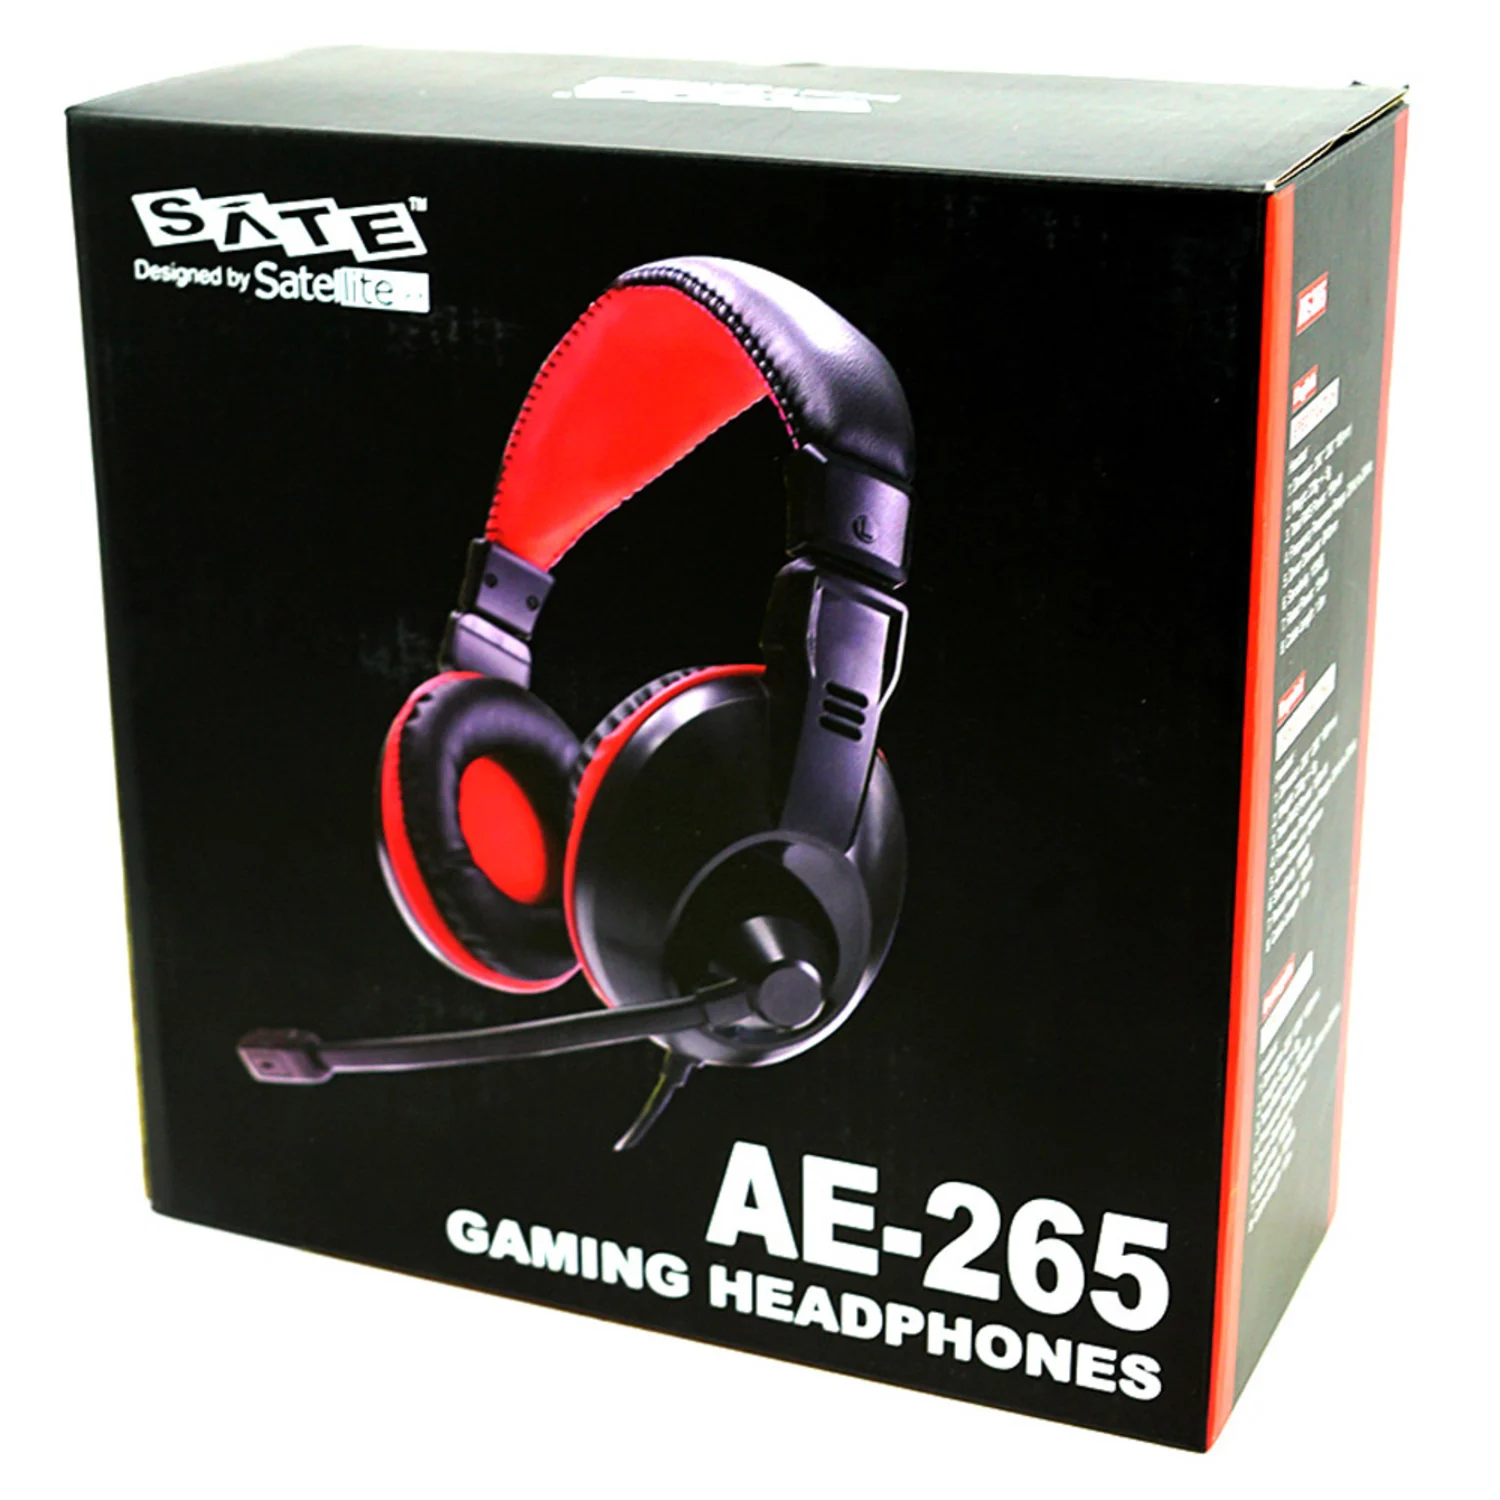 Headset Satellite AE-265 Gaming / P2 - Preto e Vermelho